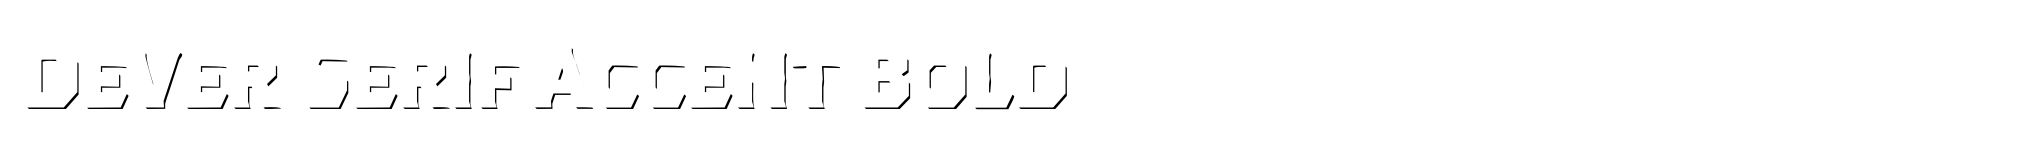 Dever Serif Accent Bold image